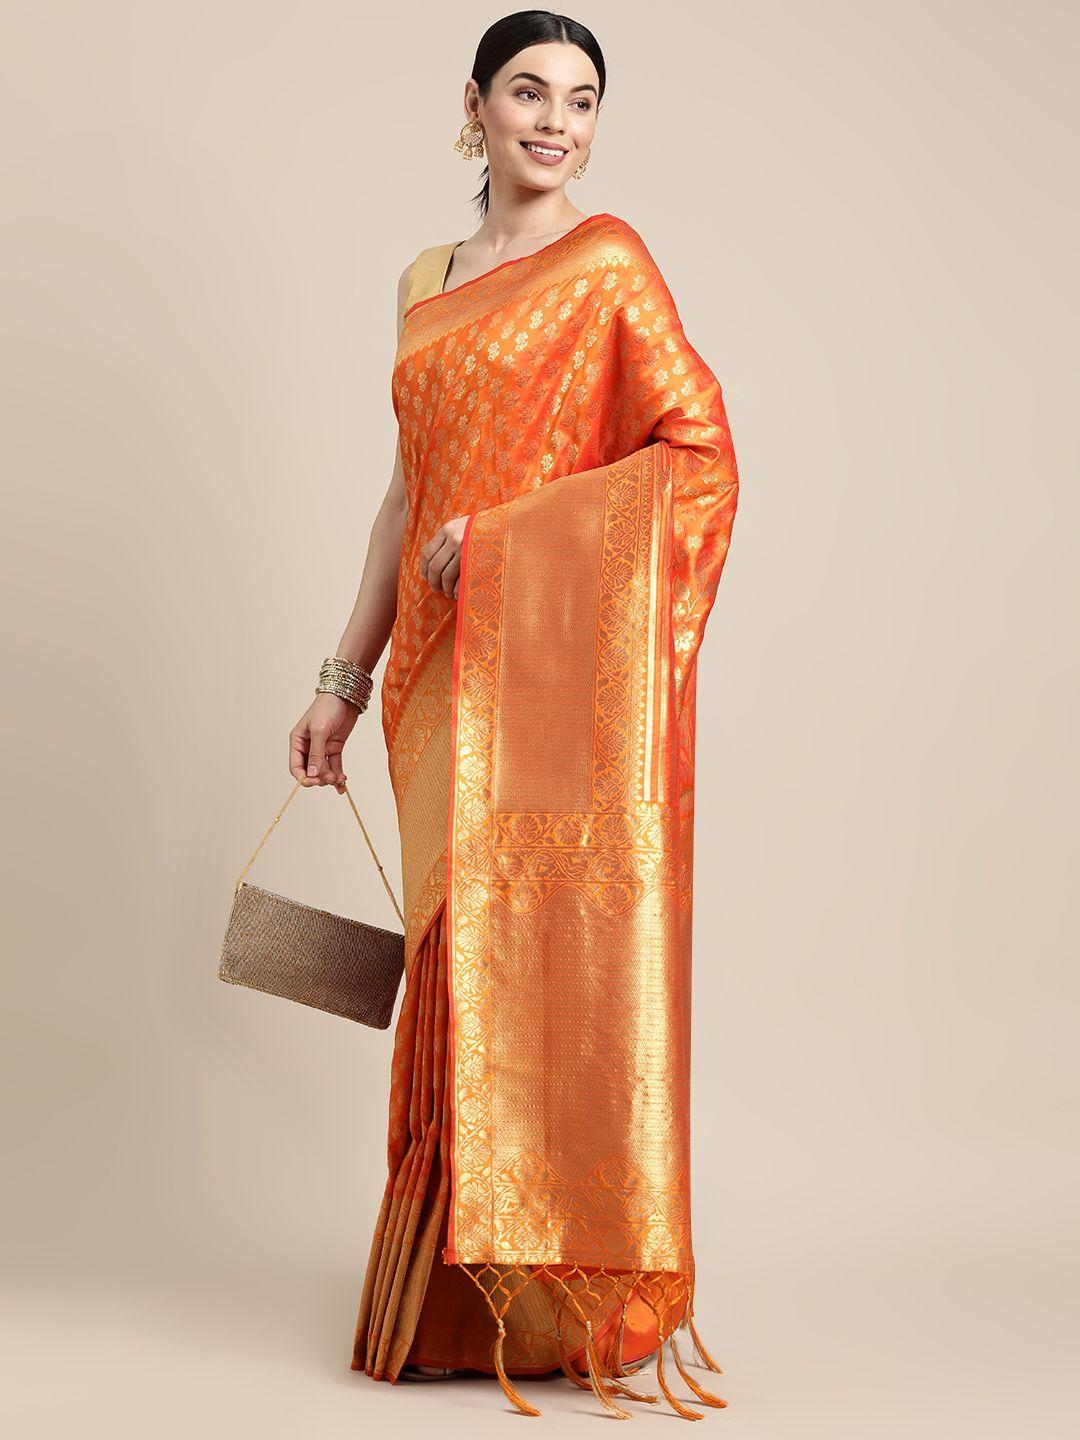 sangam prints orange & golden ethnic motifs silk blend saree